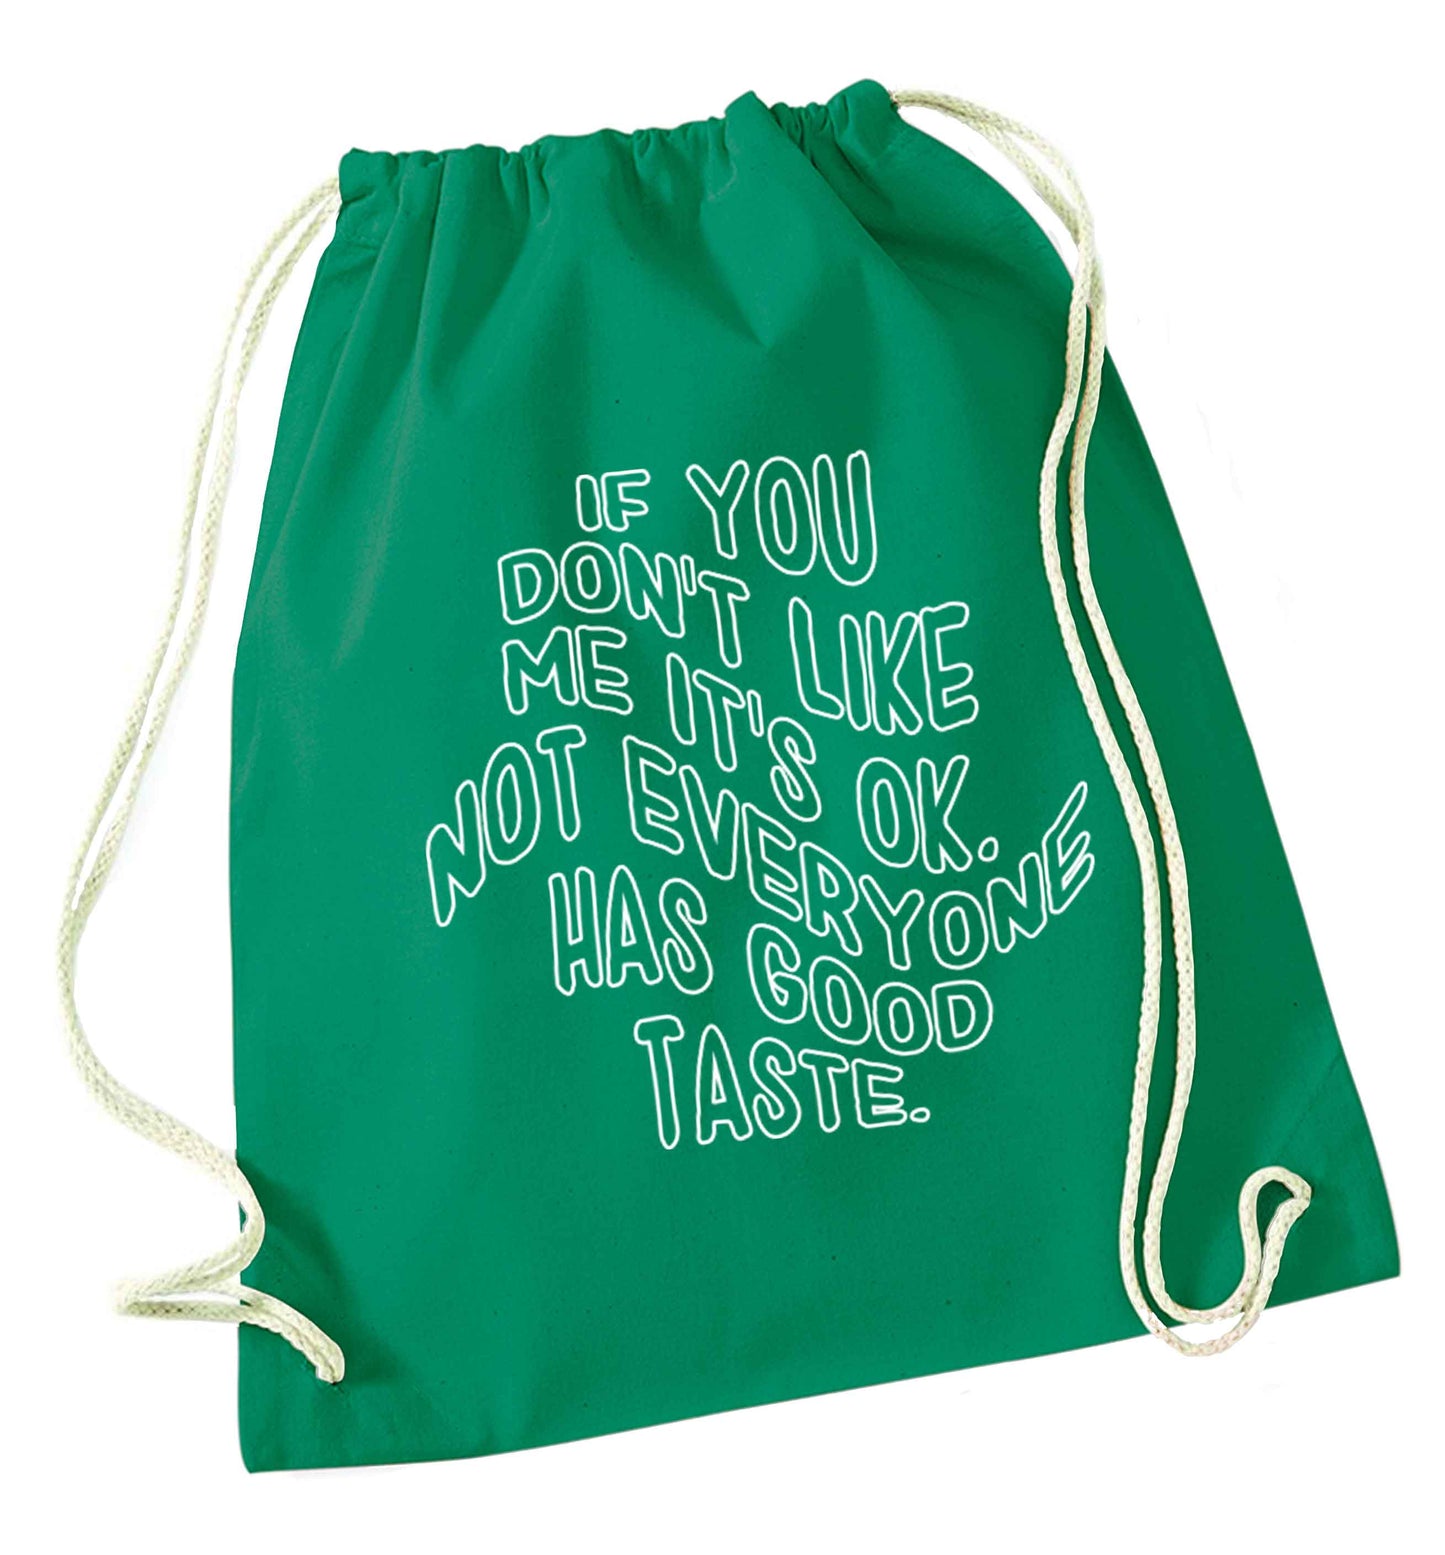 If you don't like me it's ok not everyone has good taste green drawstring bag